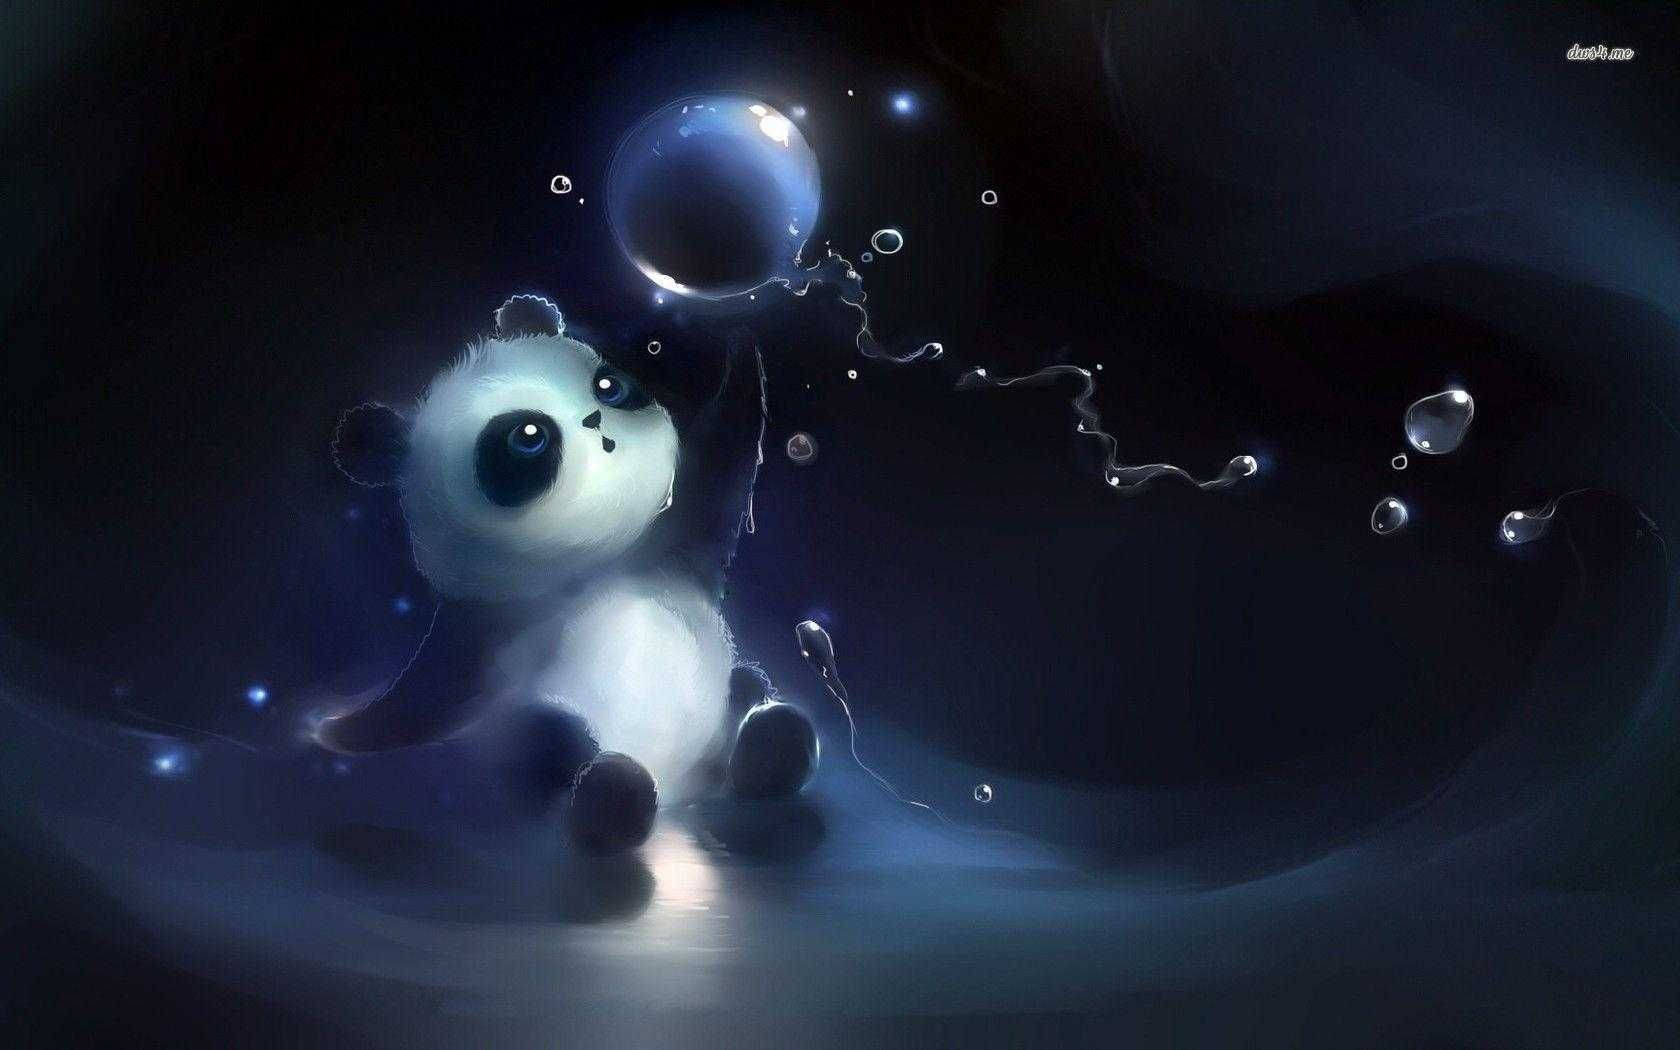 Cute Panda Playing With Bubble